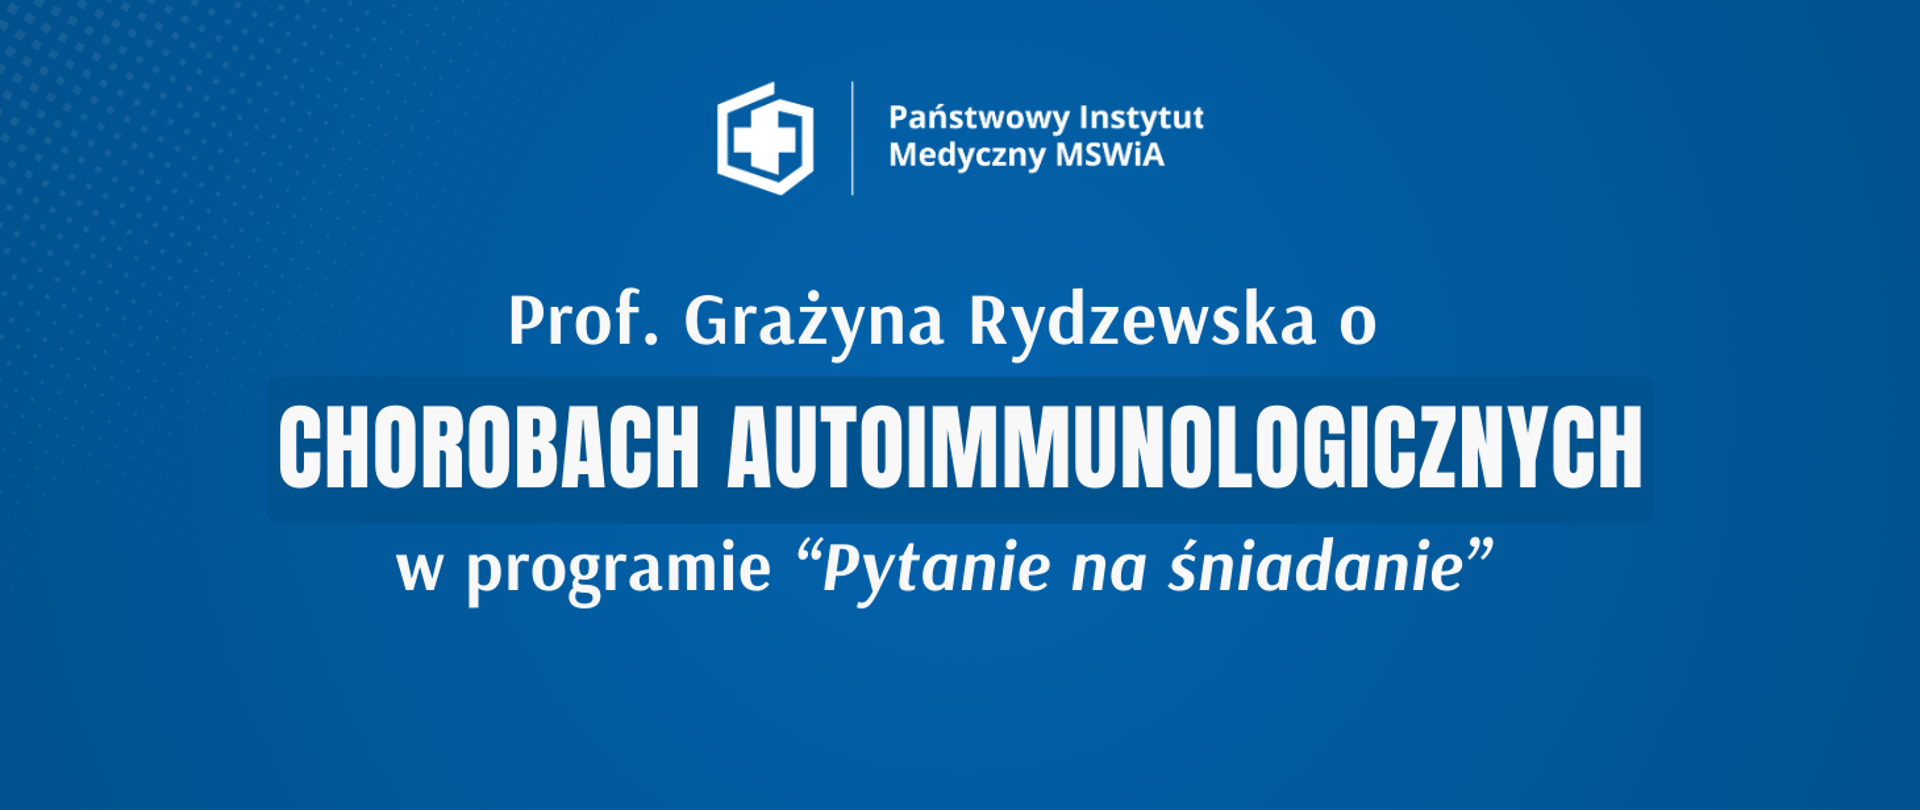 Prof. Rydzewska o chorobach autoimmunologicznych